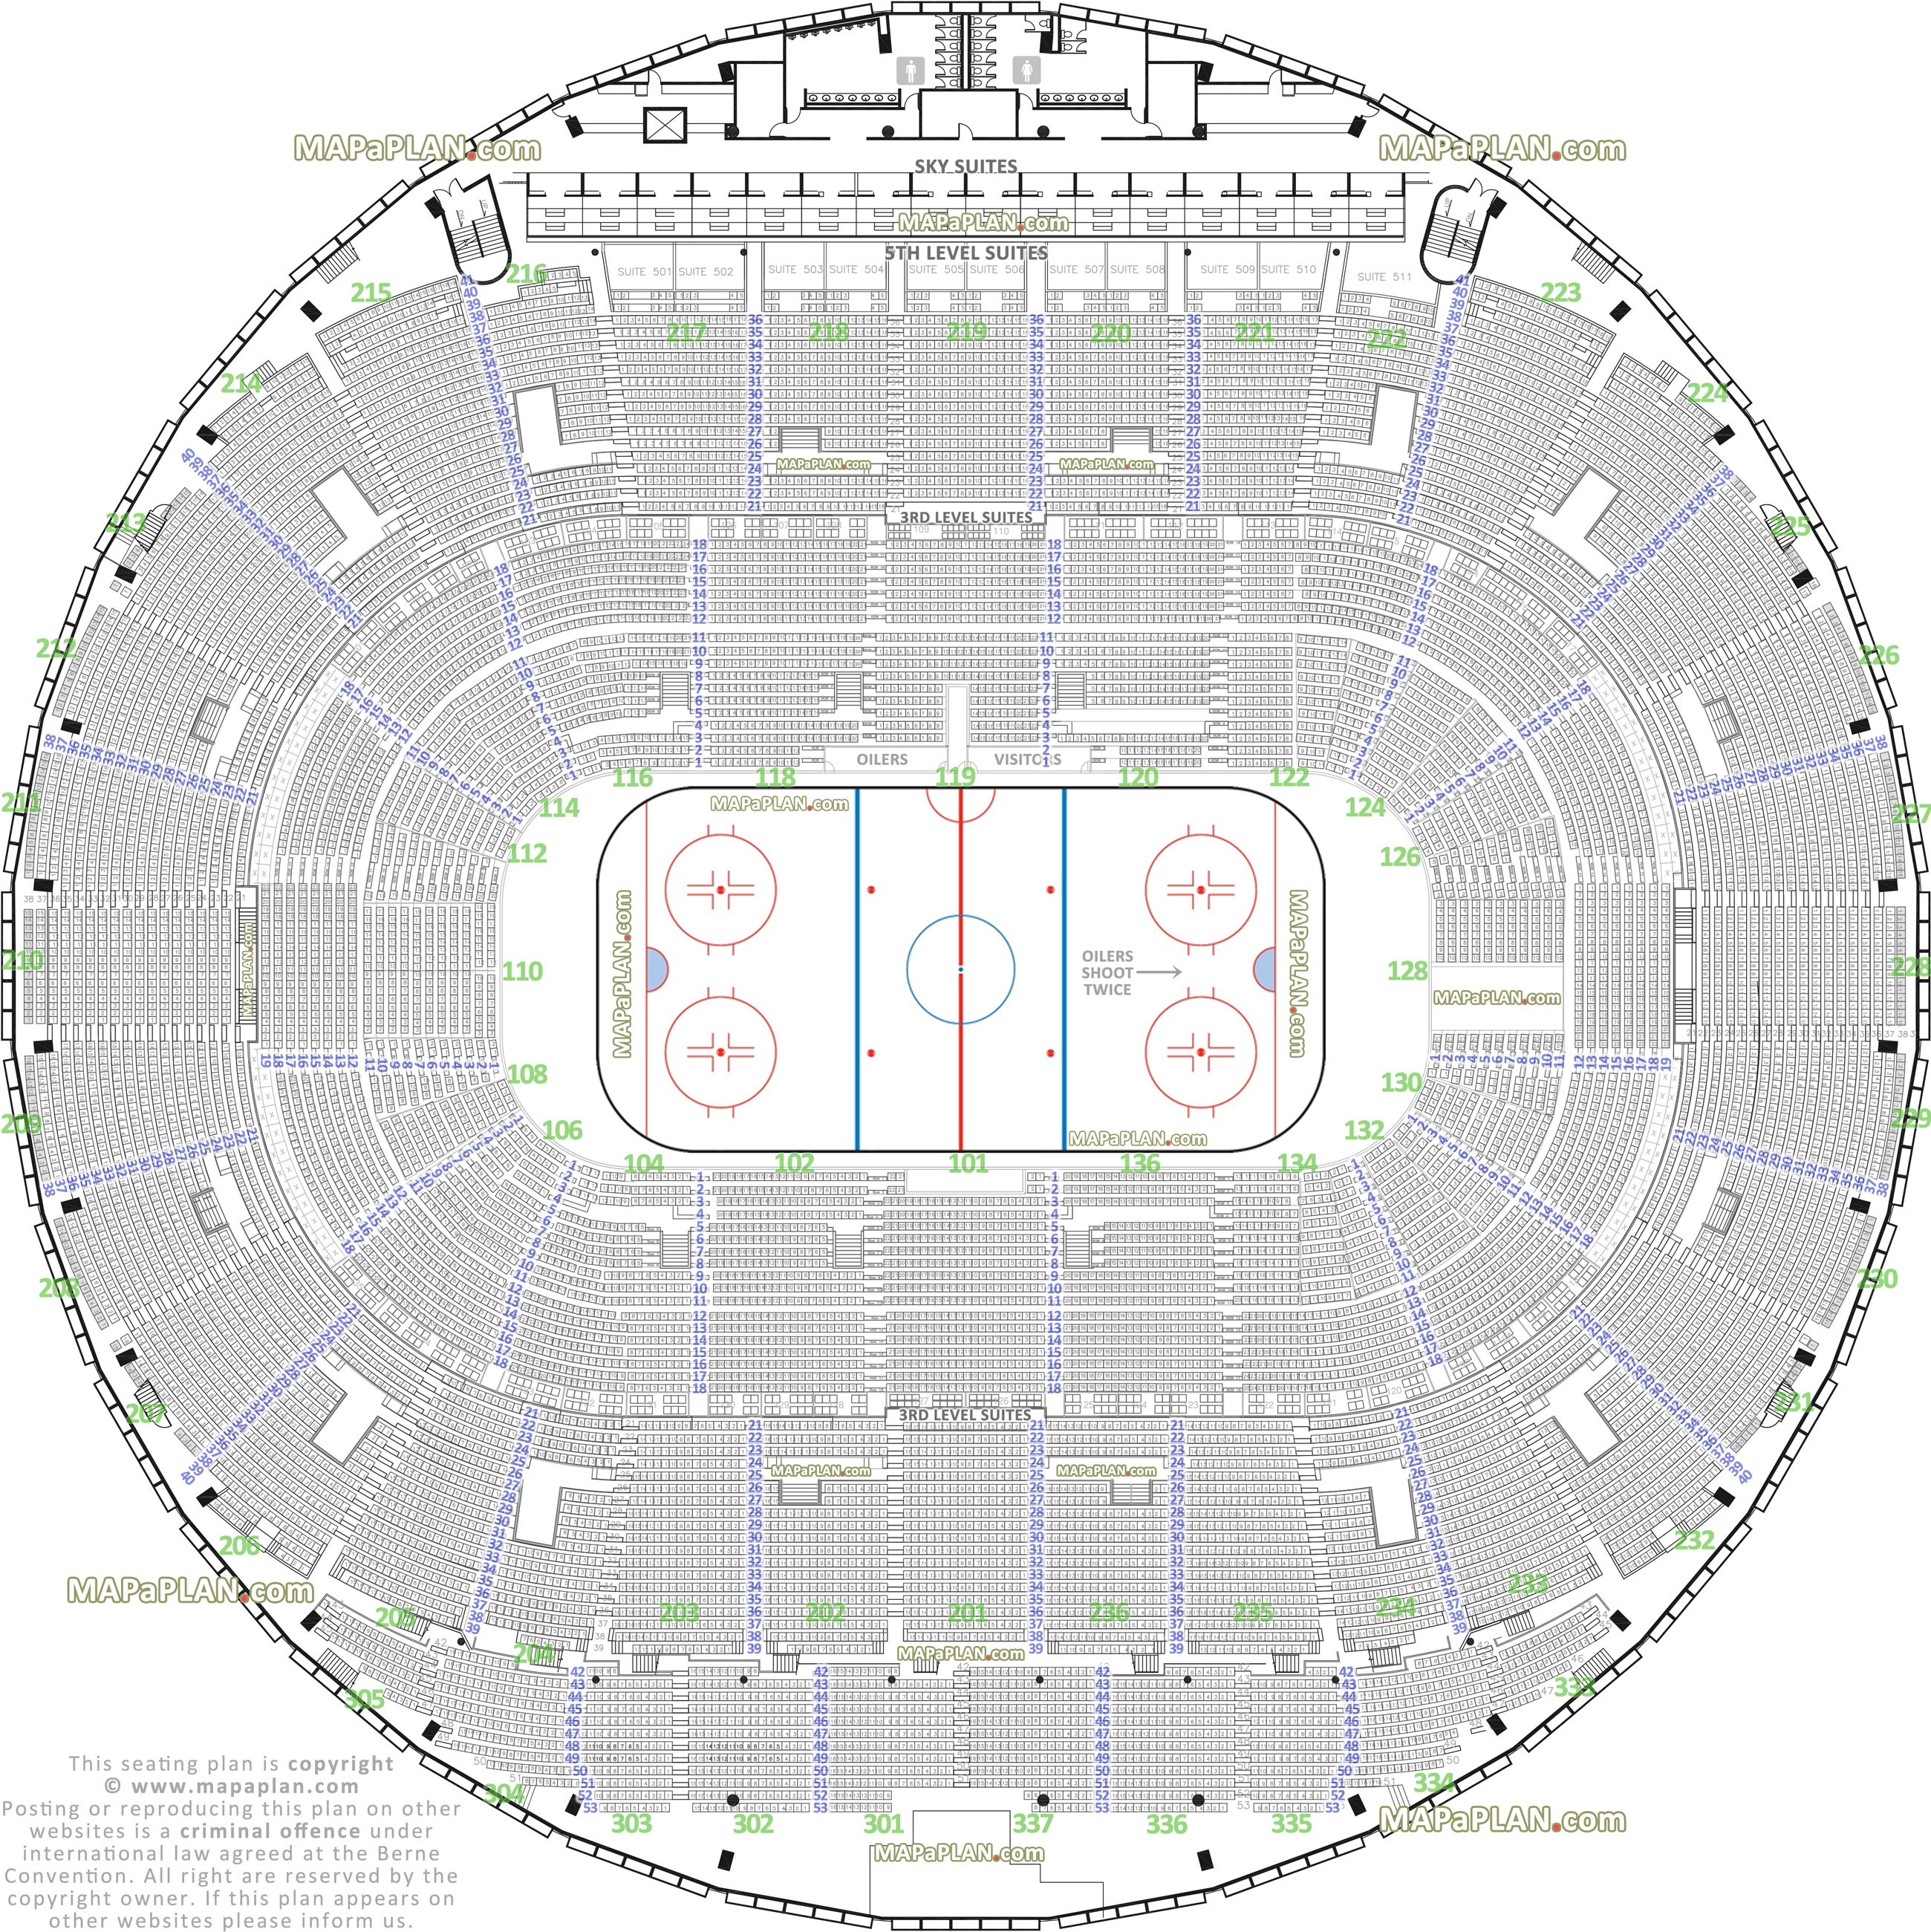 Edmonton Oilers New Arena Seating Chart